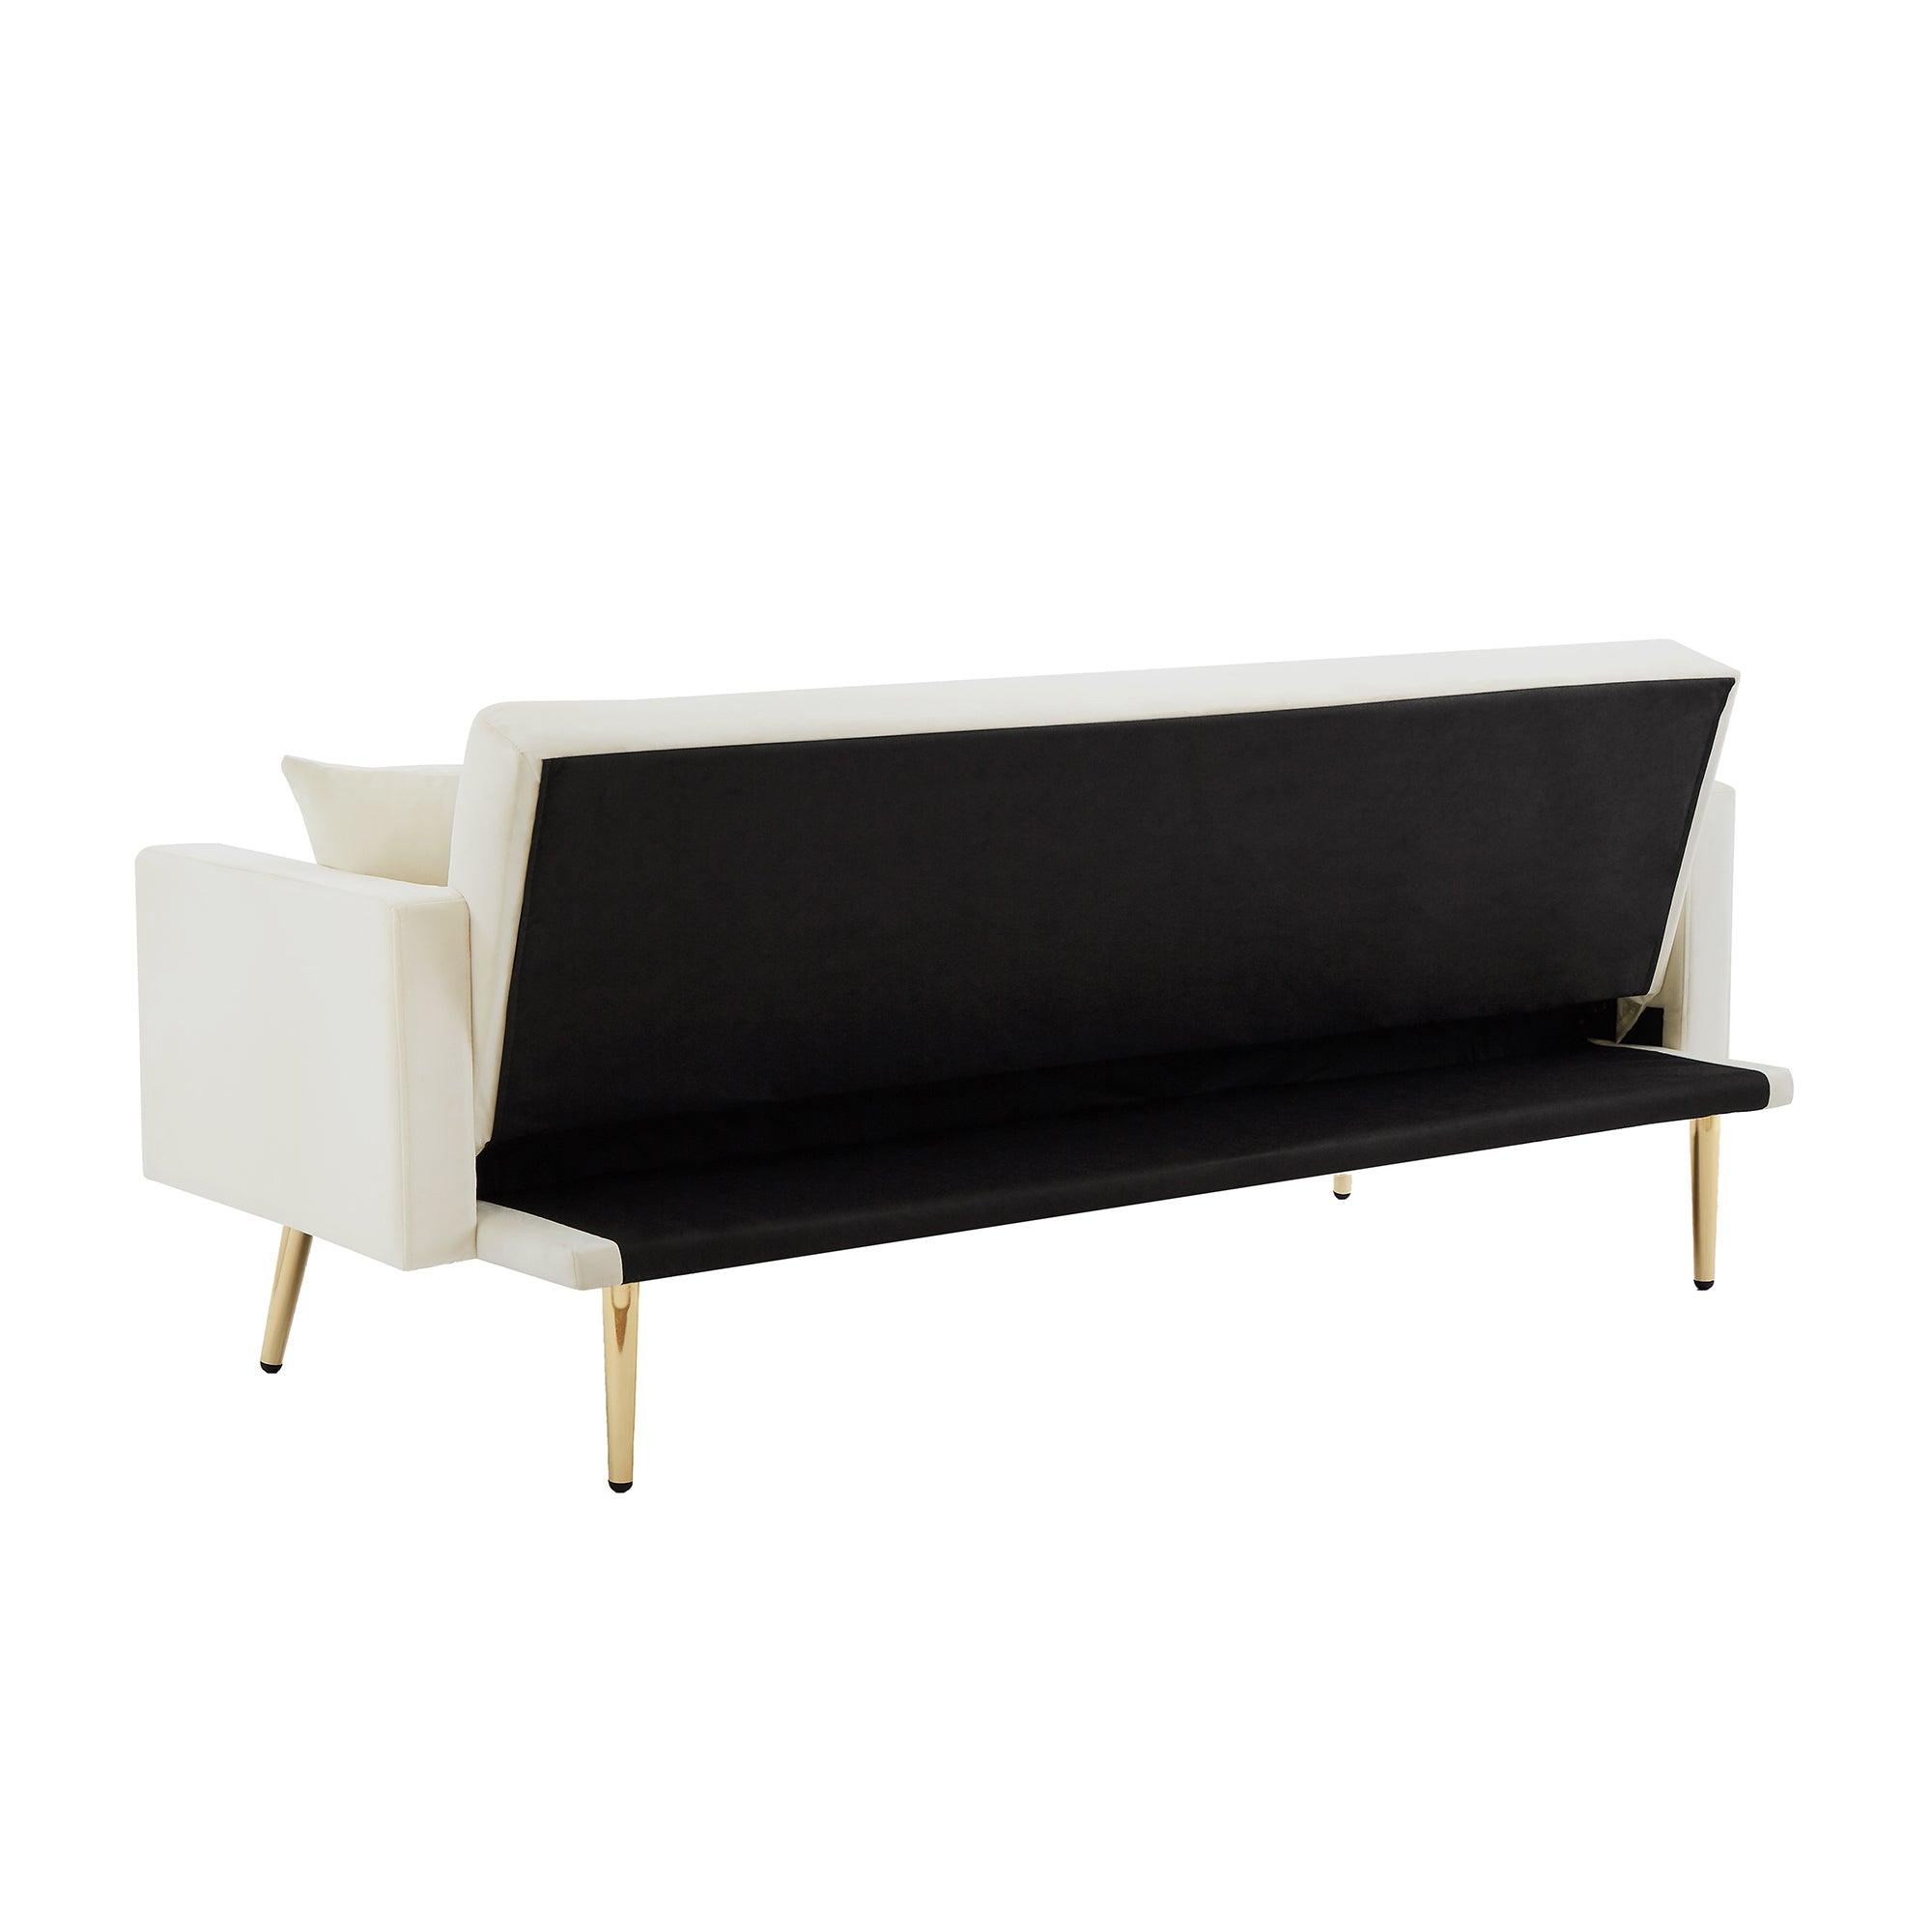 Cream White Velvet  Convertible Folding Futon Sofa Bed, Sleeper Sofa Couch For Compact Living Space. LamCham